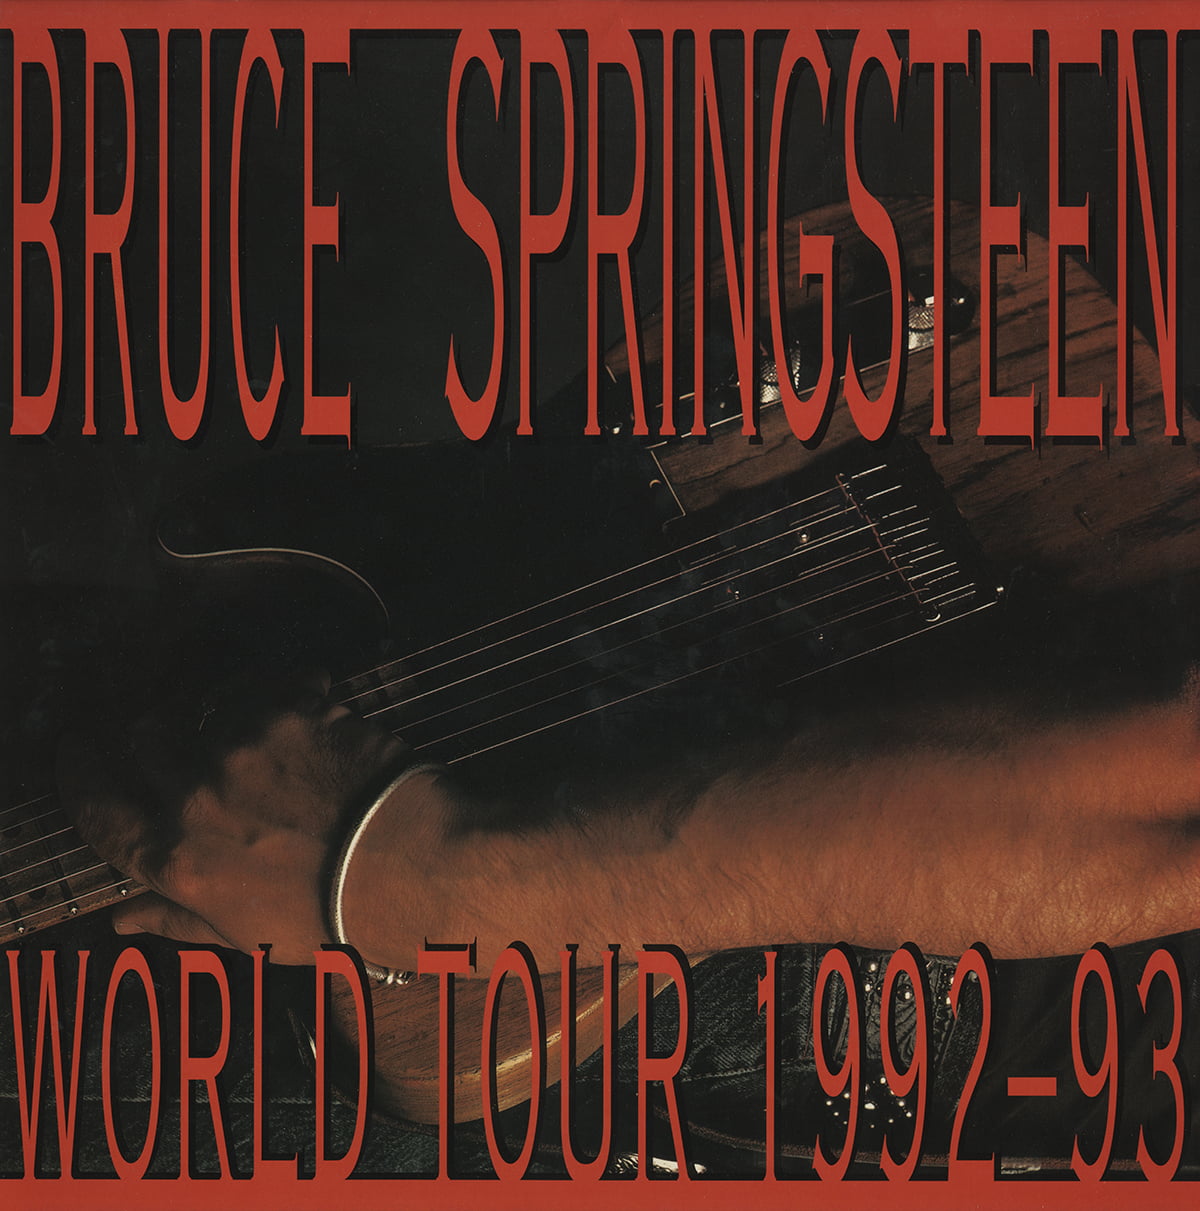 Bruce Springsteen 1992-1993 World Tour book